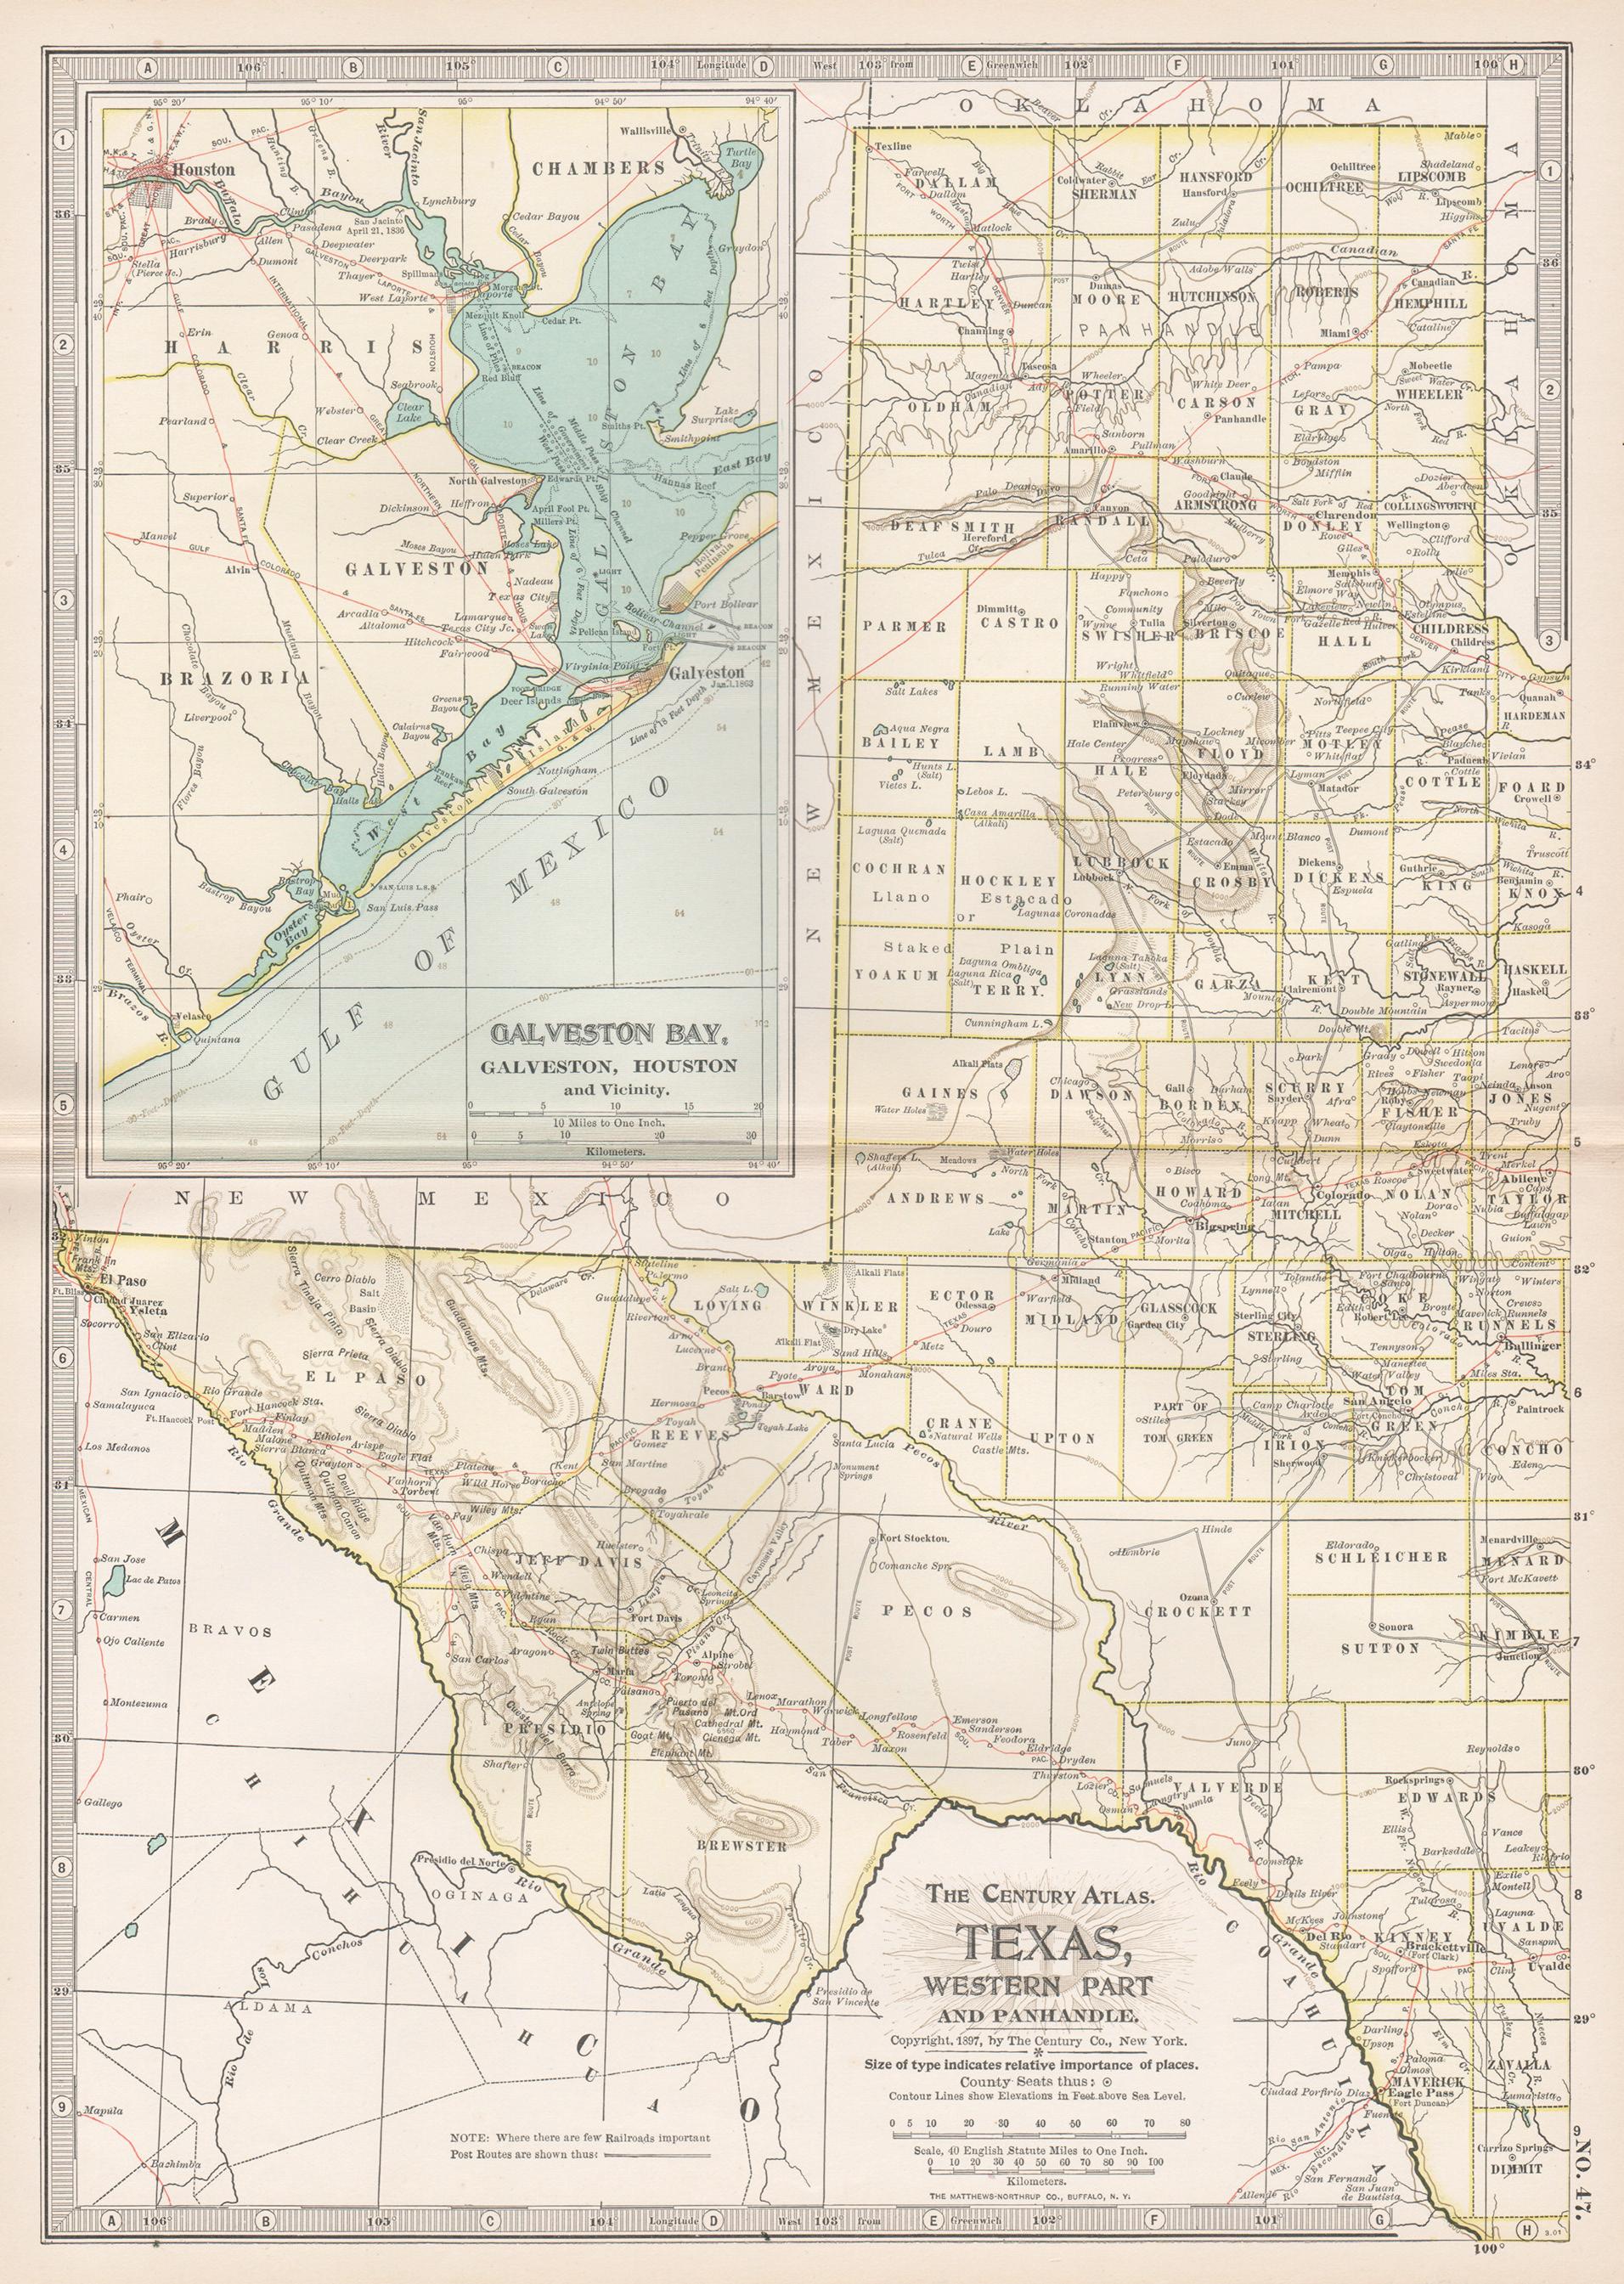 Unknown Print - Texas, Western Part. USA. Century Atlas state antique vintage map